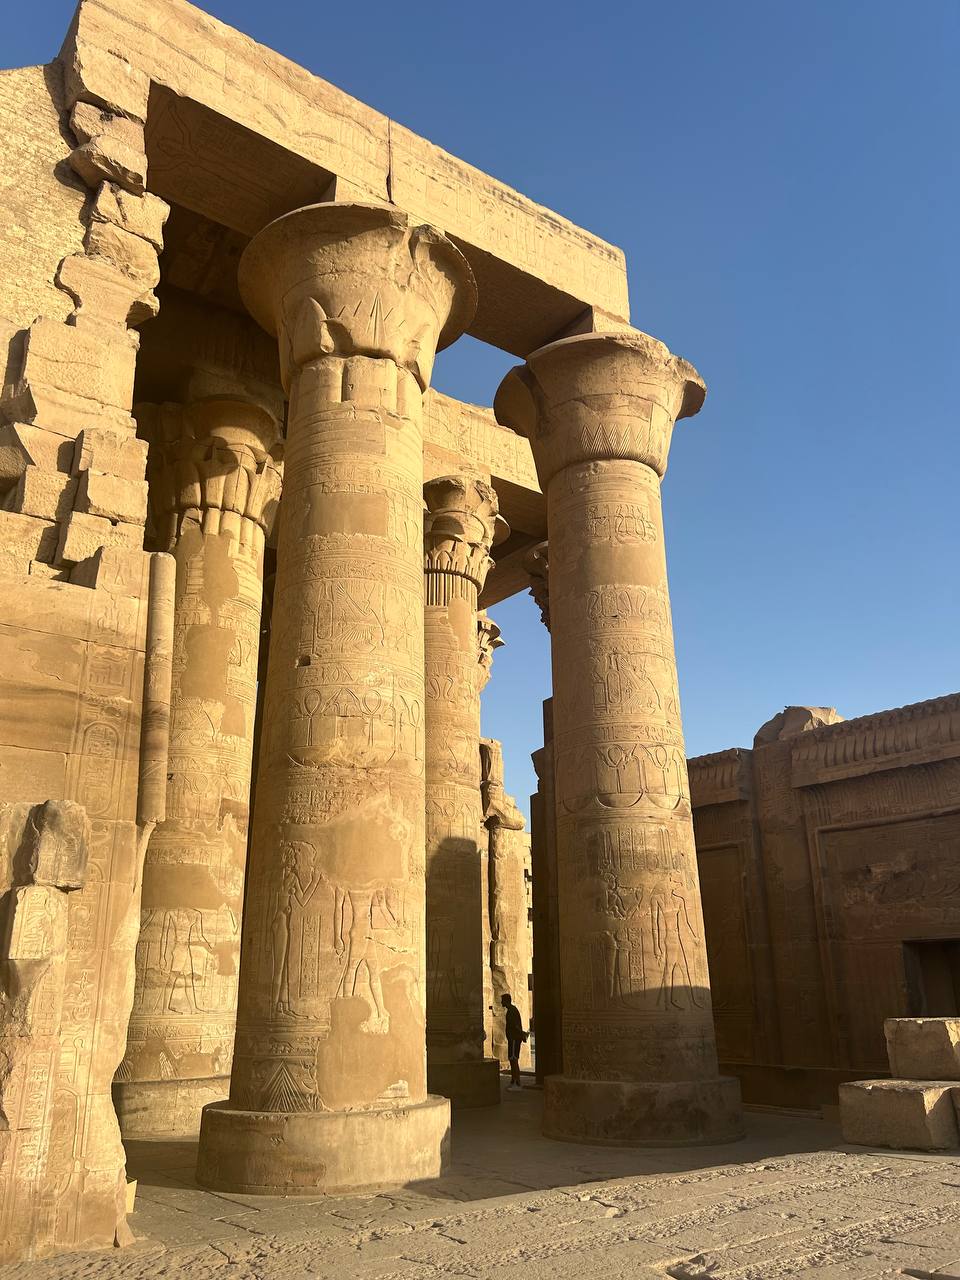 Visiting Aswan